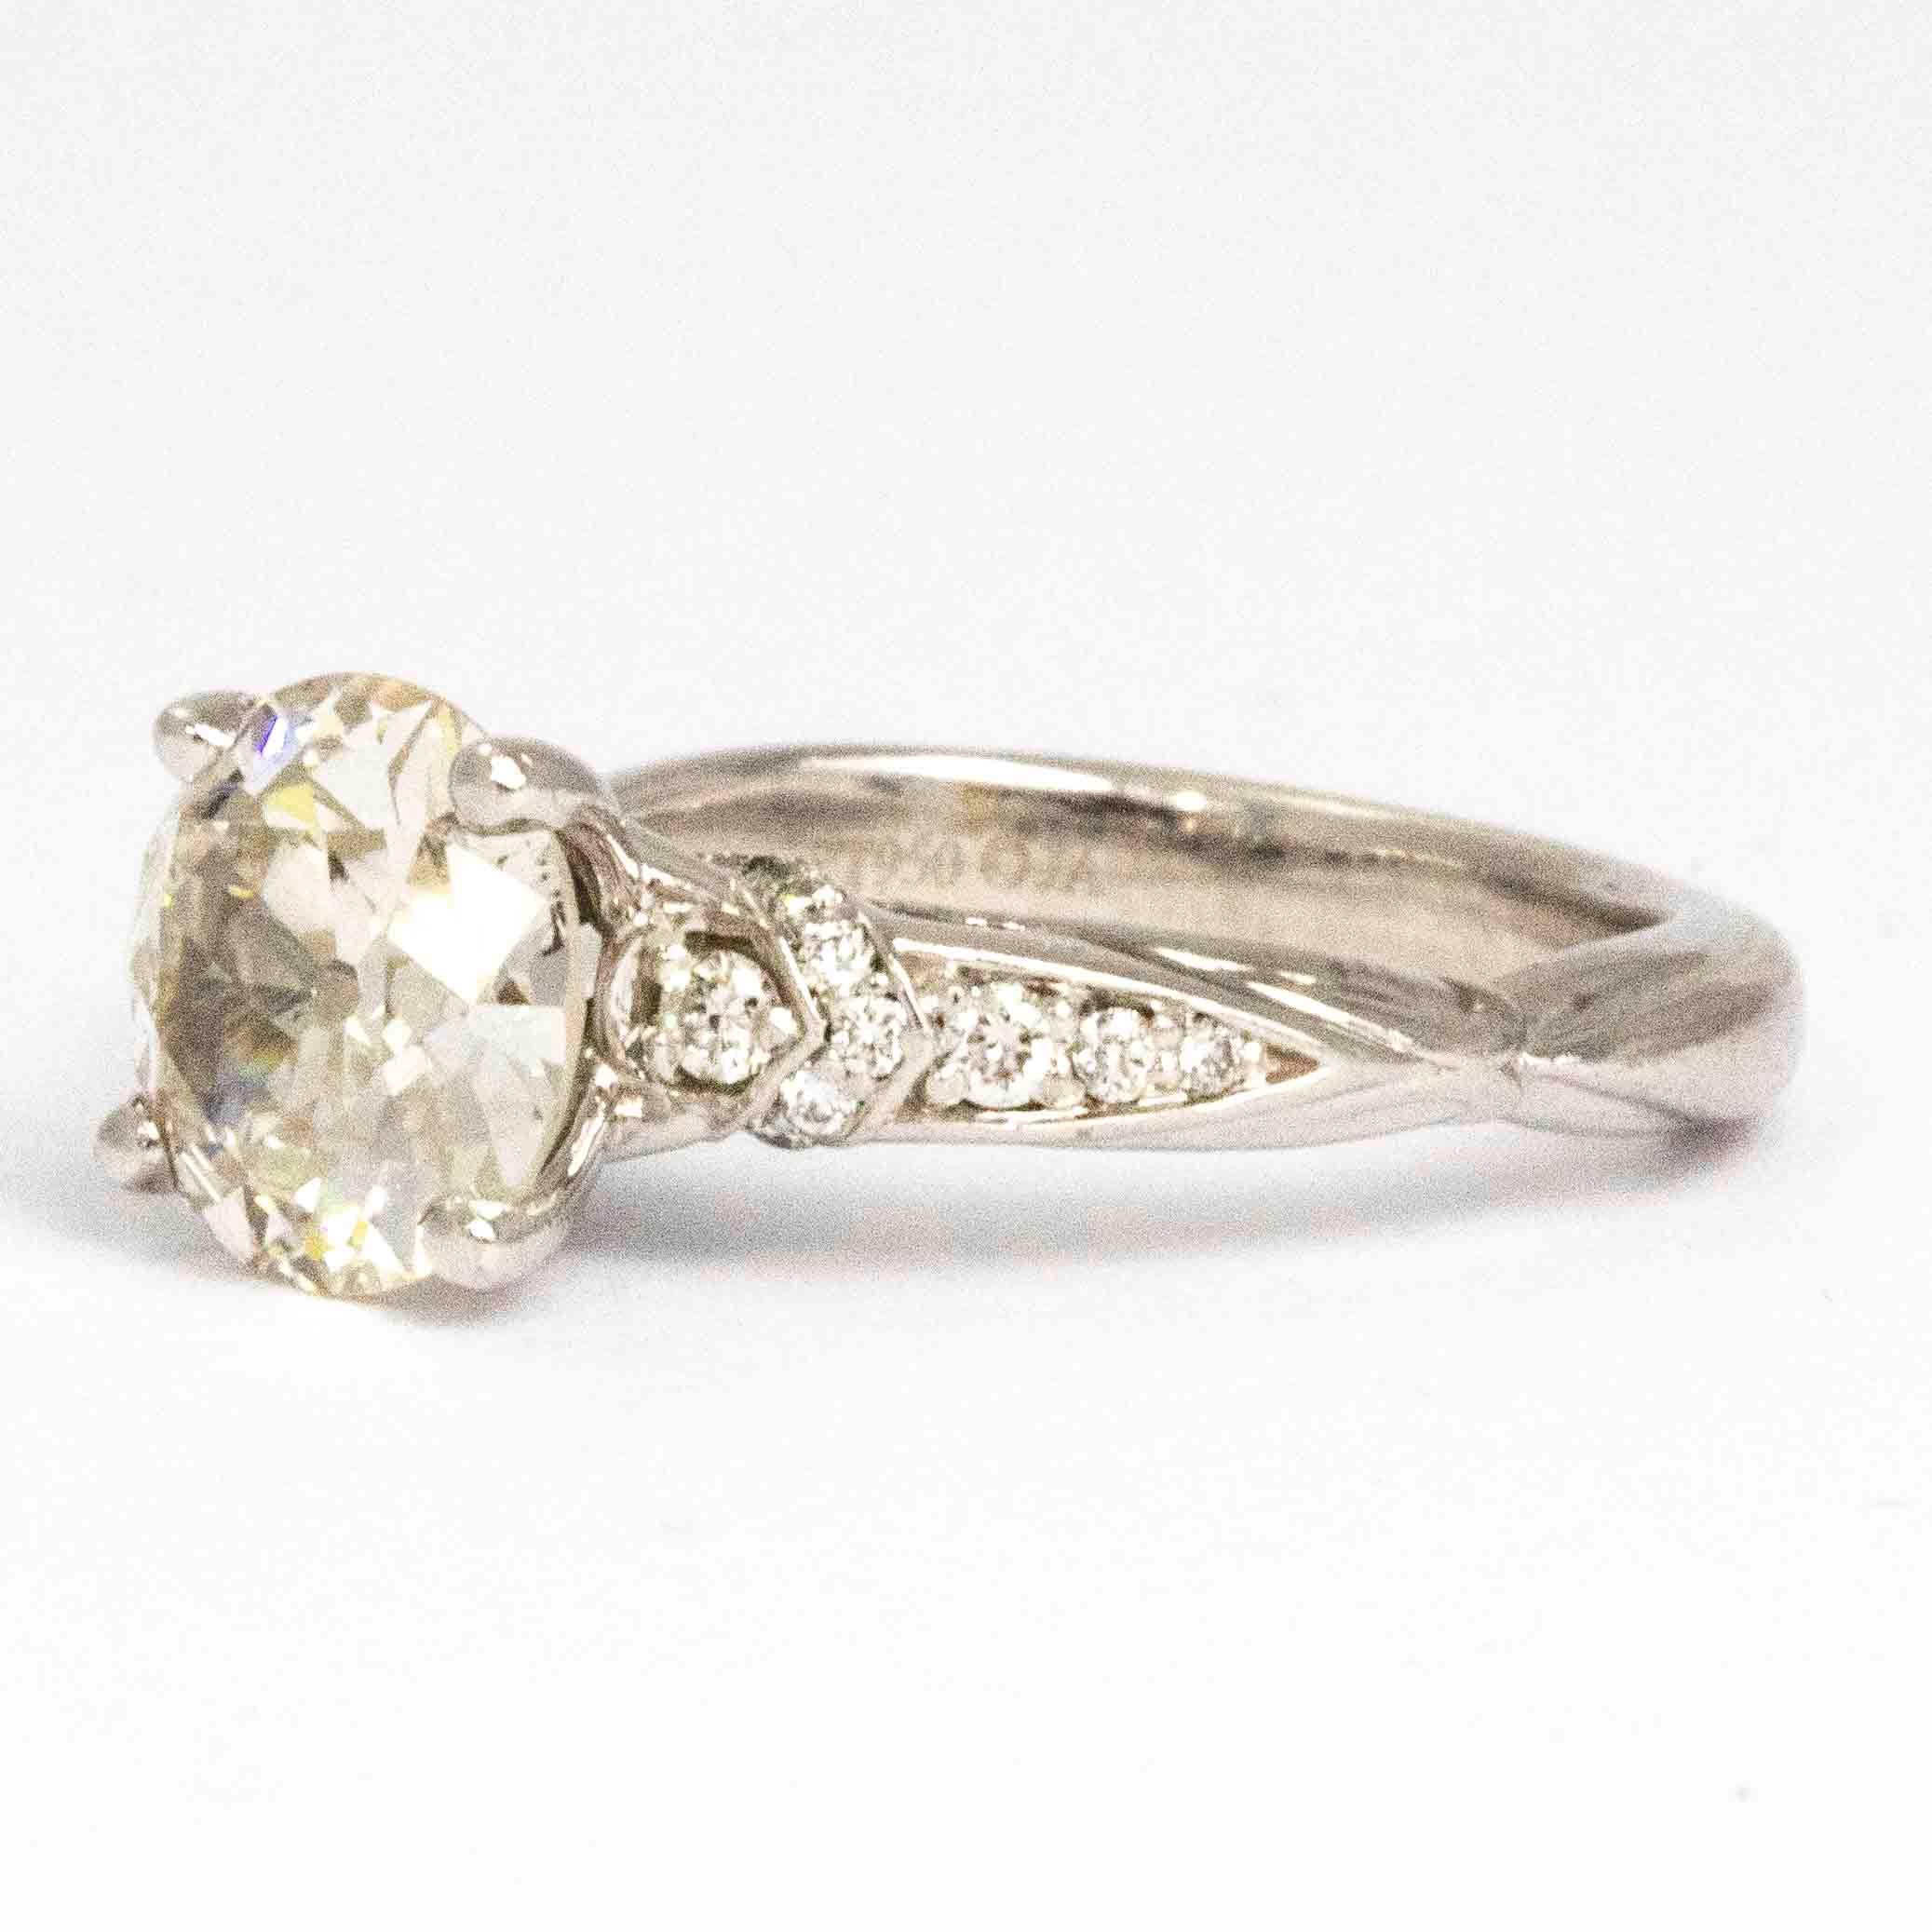 2 carat diamond ring worth